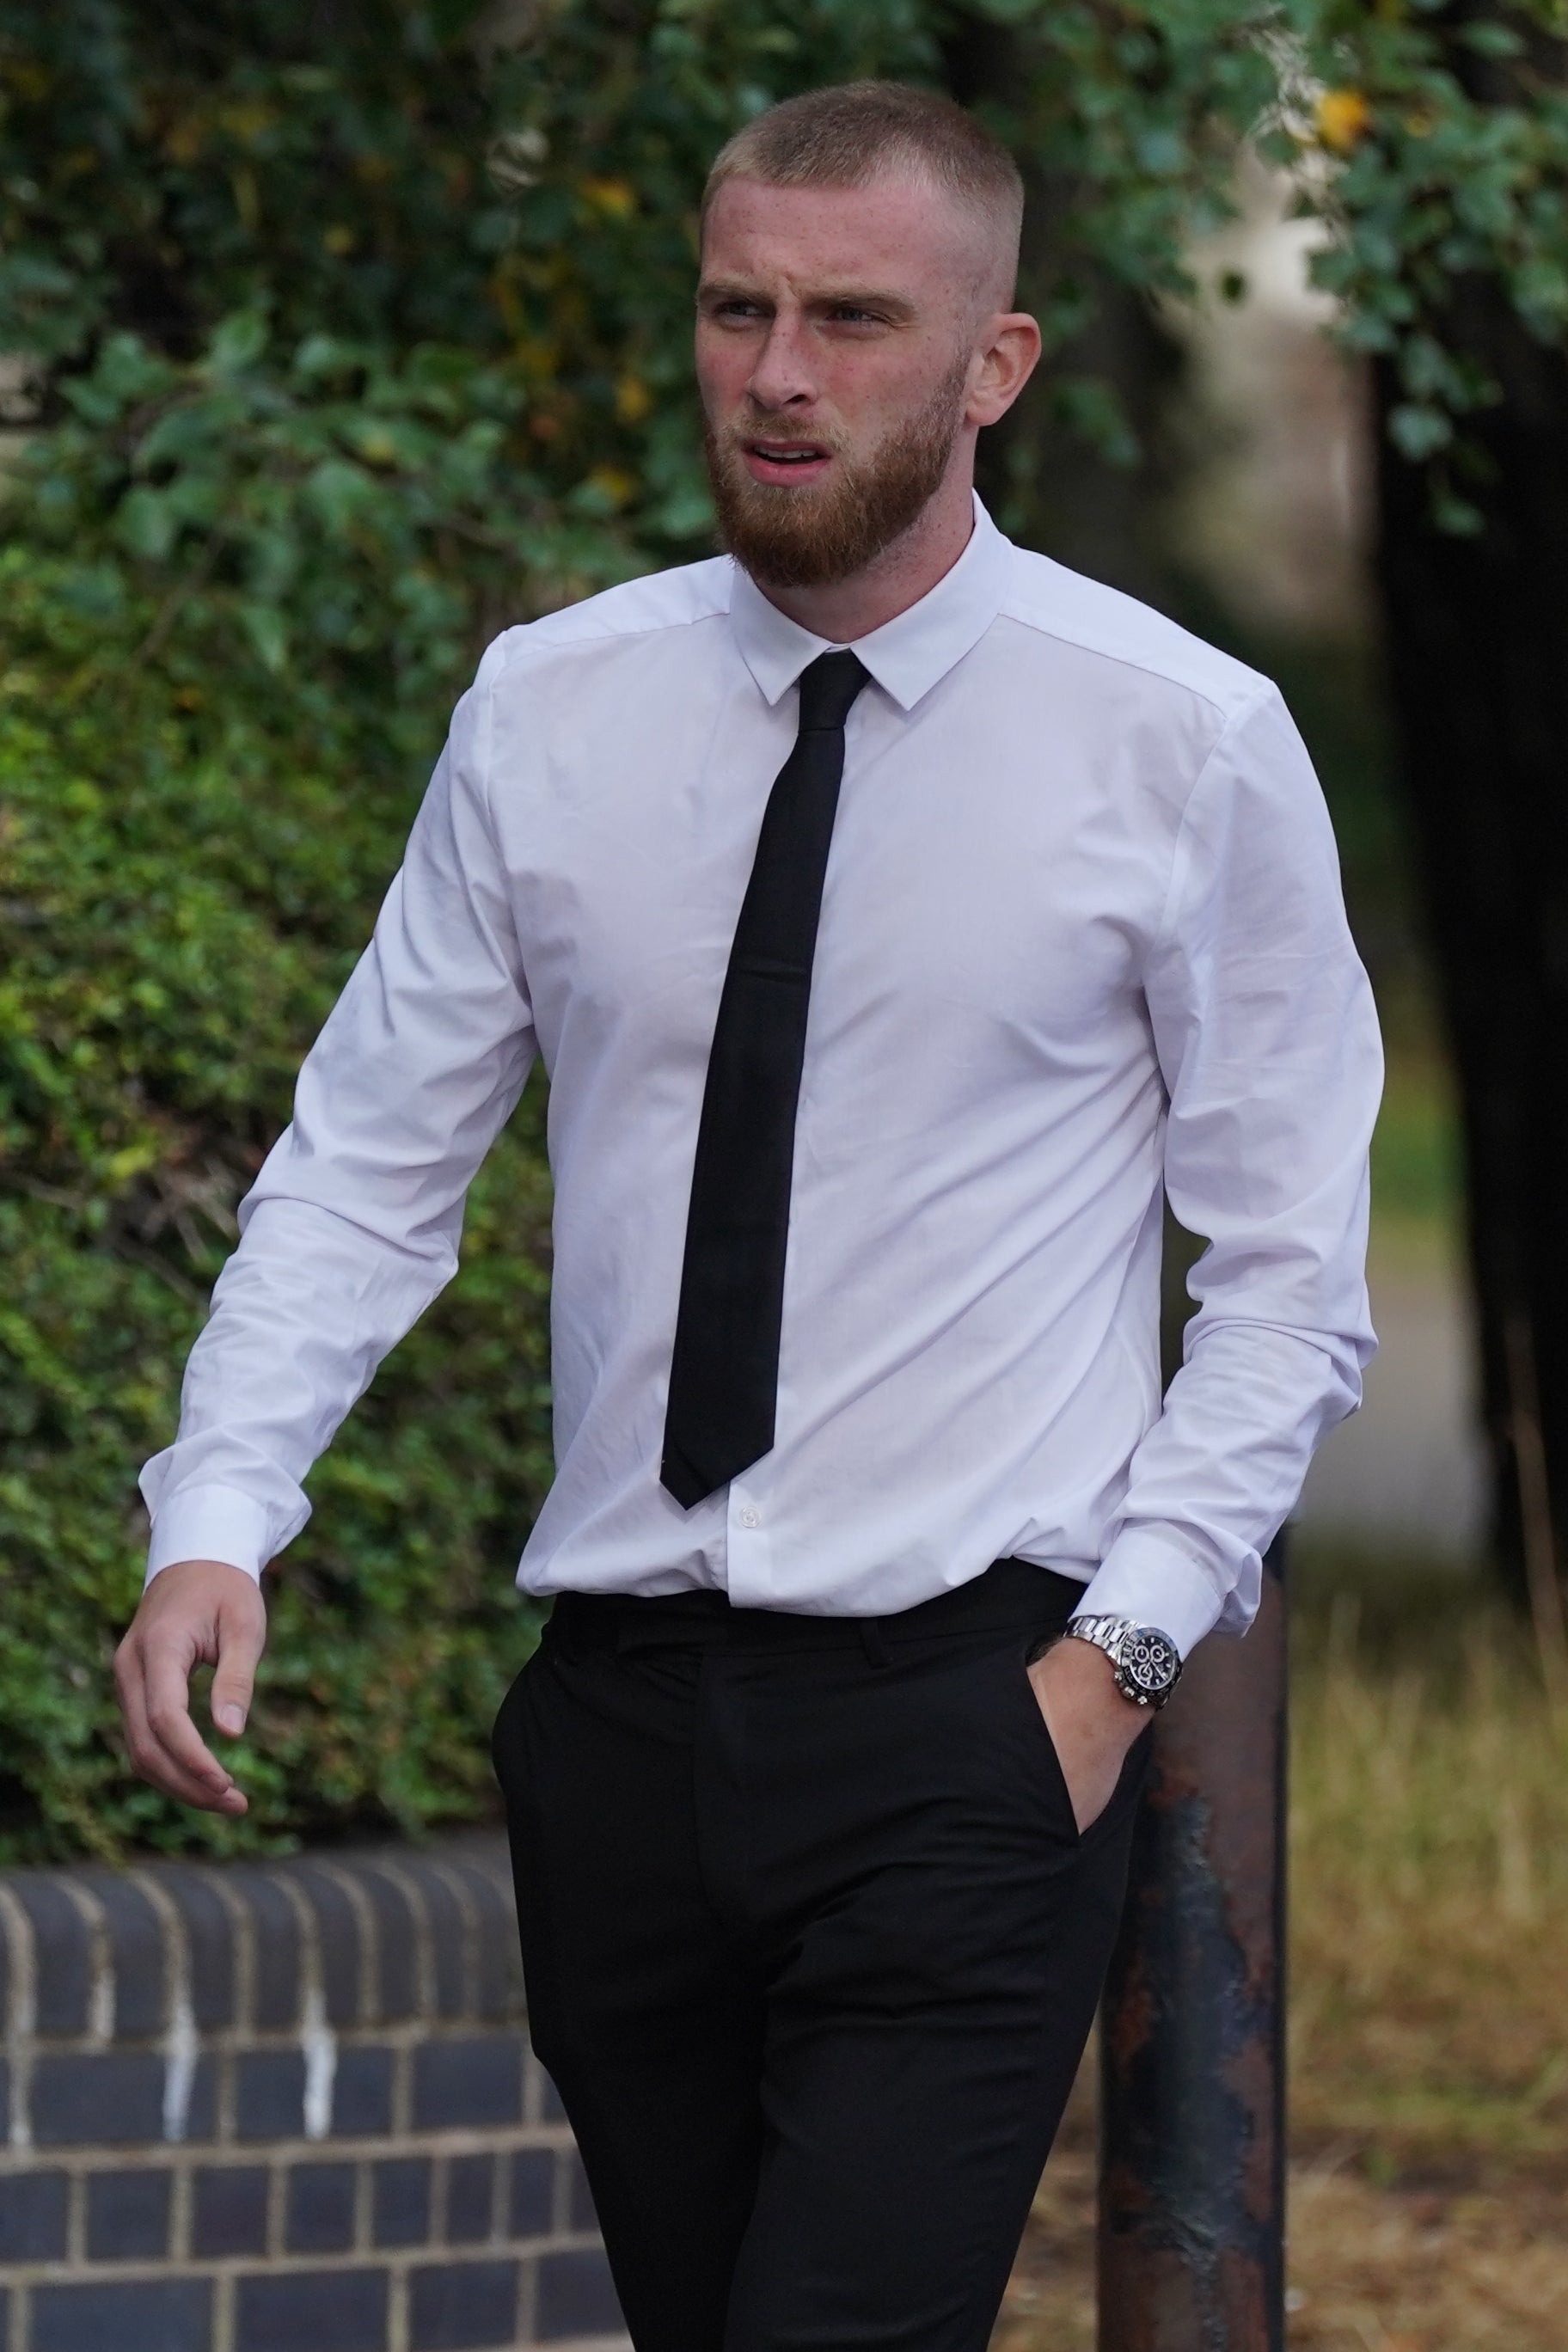 Sheffield United player Oli McBurnie arriving at Nottingham Magistrates’ Court (Jacob King/PA)